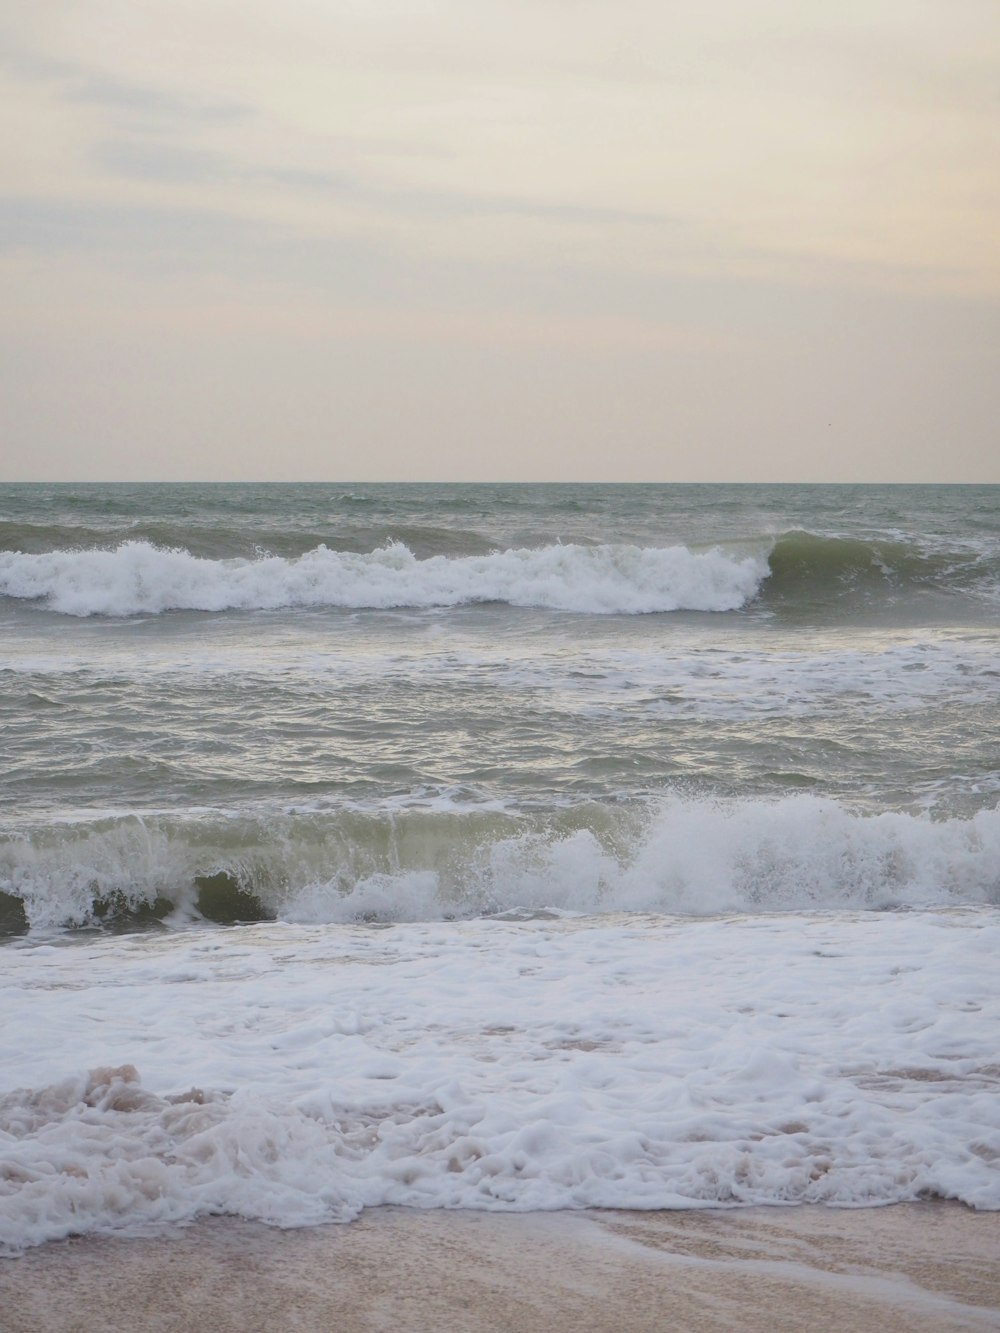 waves crashing on a beach